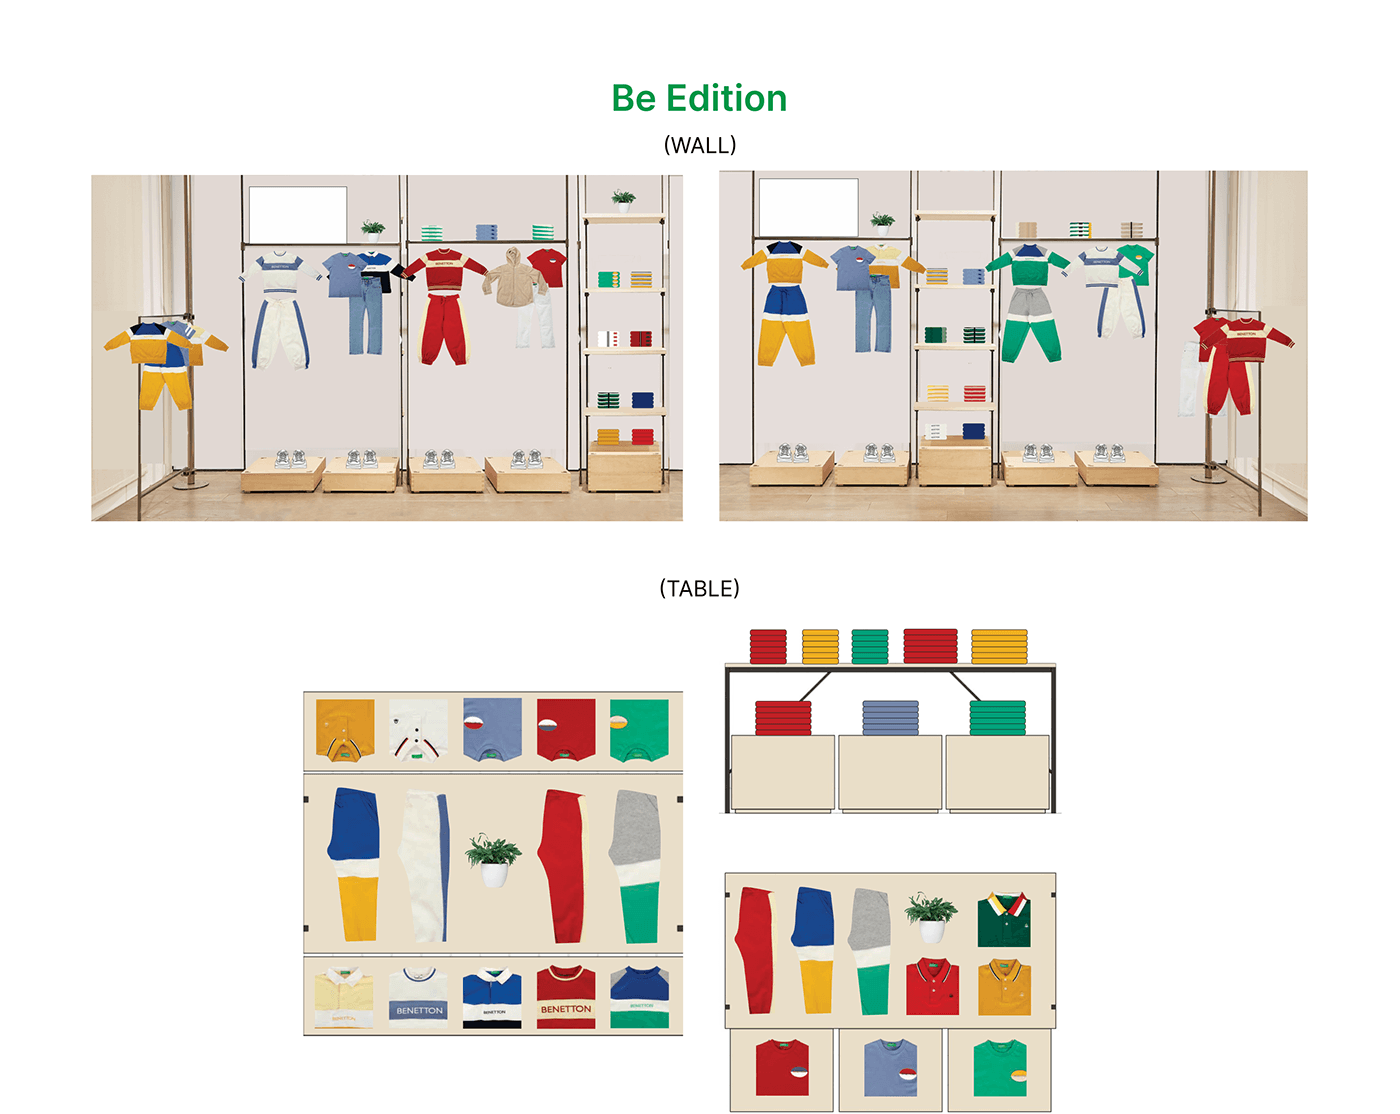 Visual Merchandising planograms Dockets Benetton Corel Draw Figma Space design Layout united colors of benetton vm